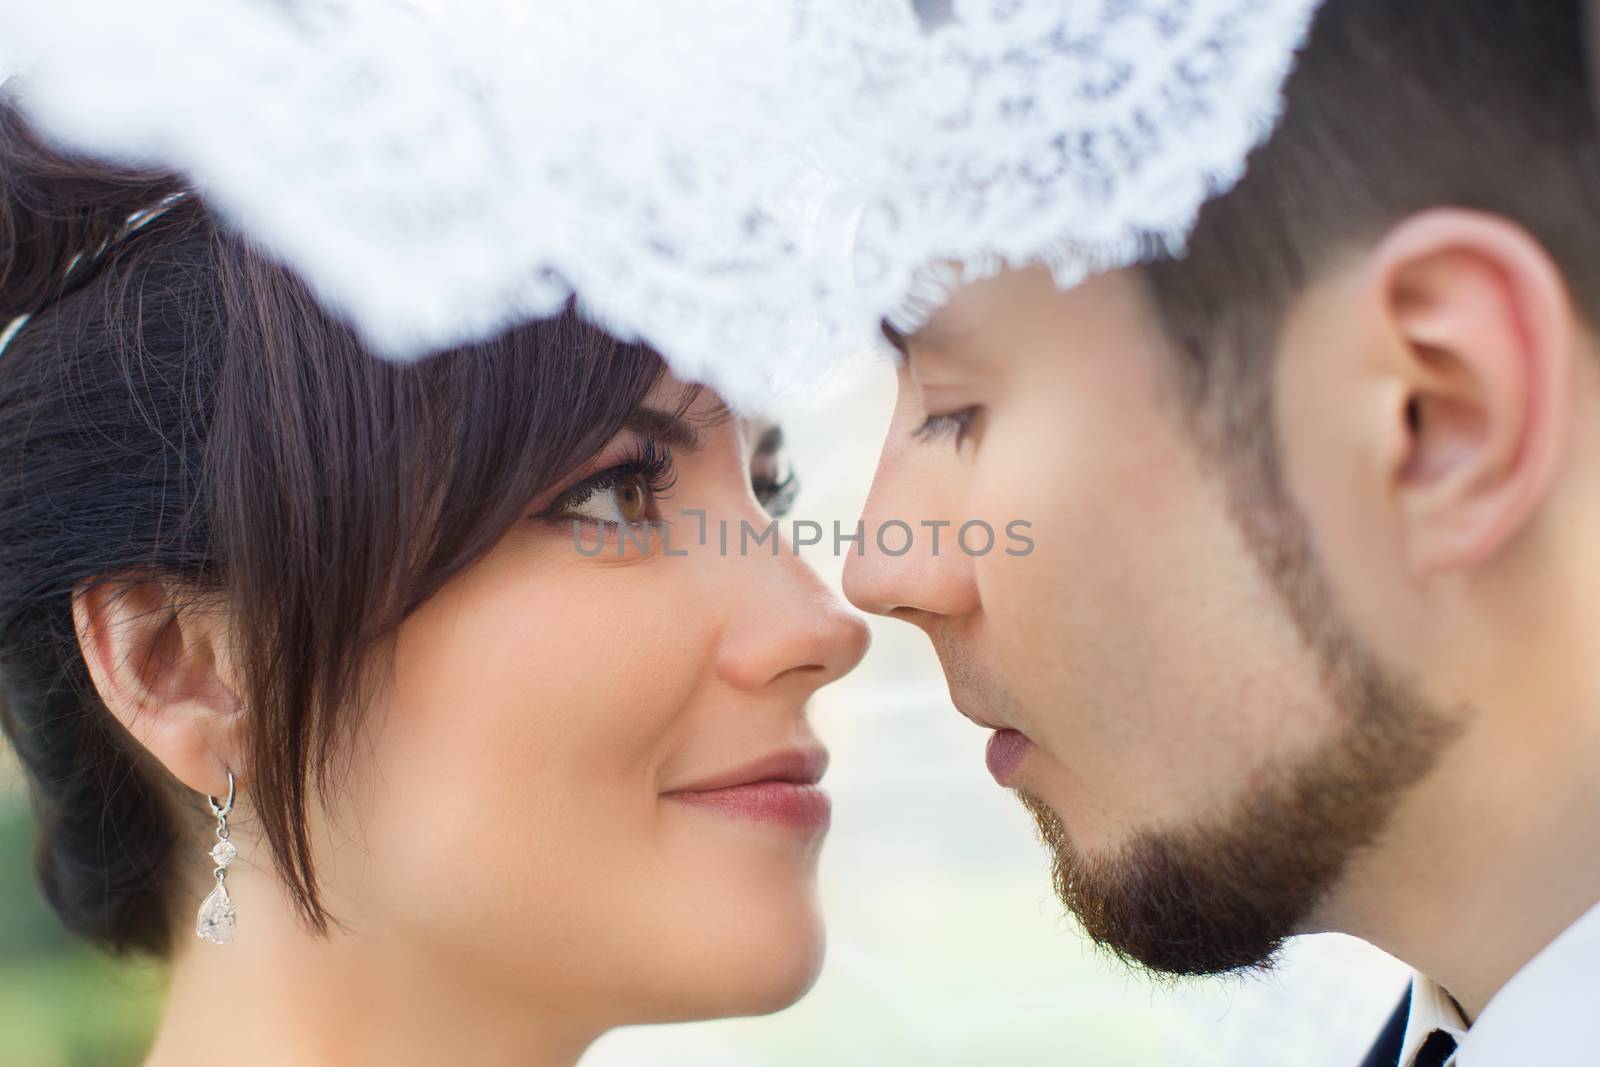 Stylish newlyweds on their wedding day by lanser314